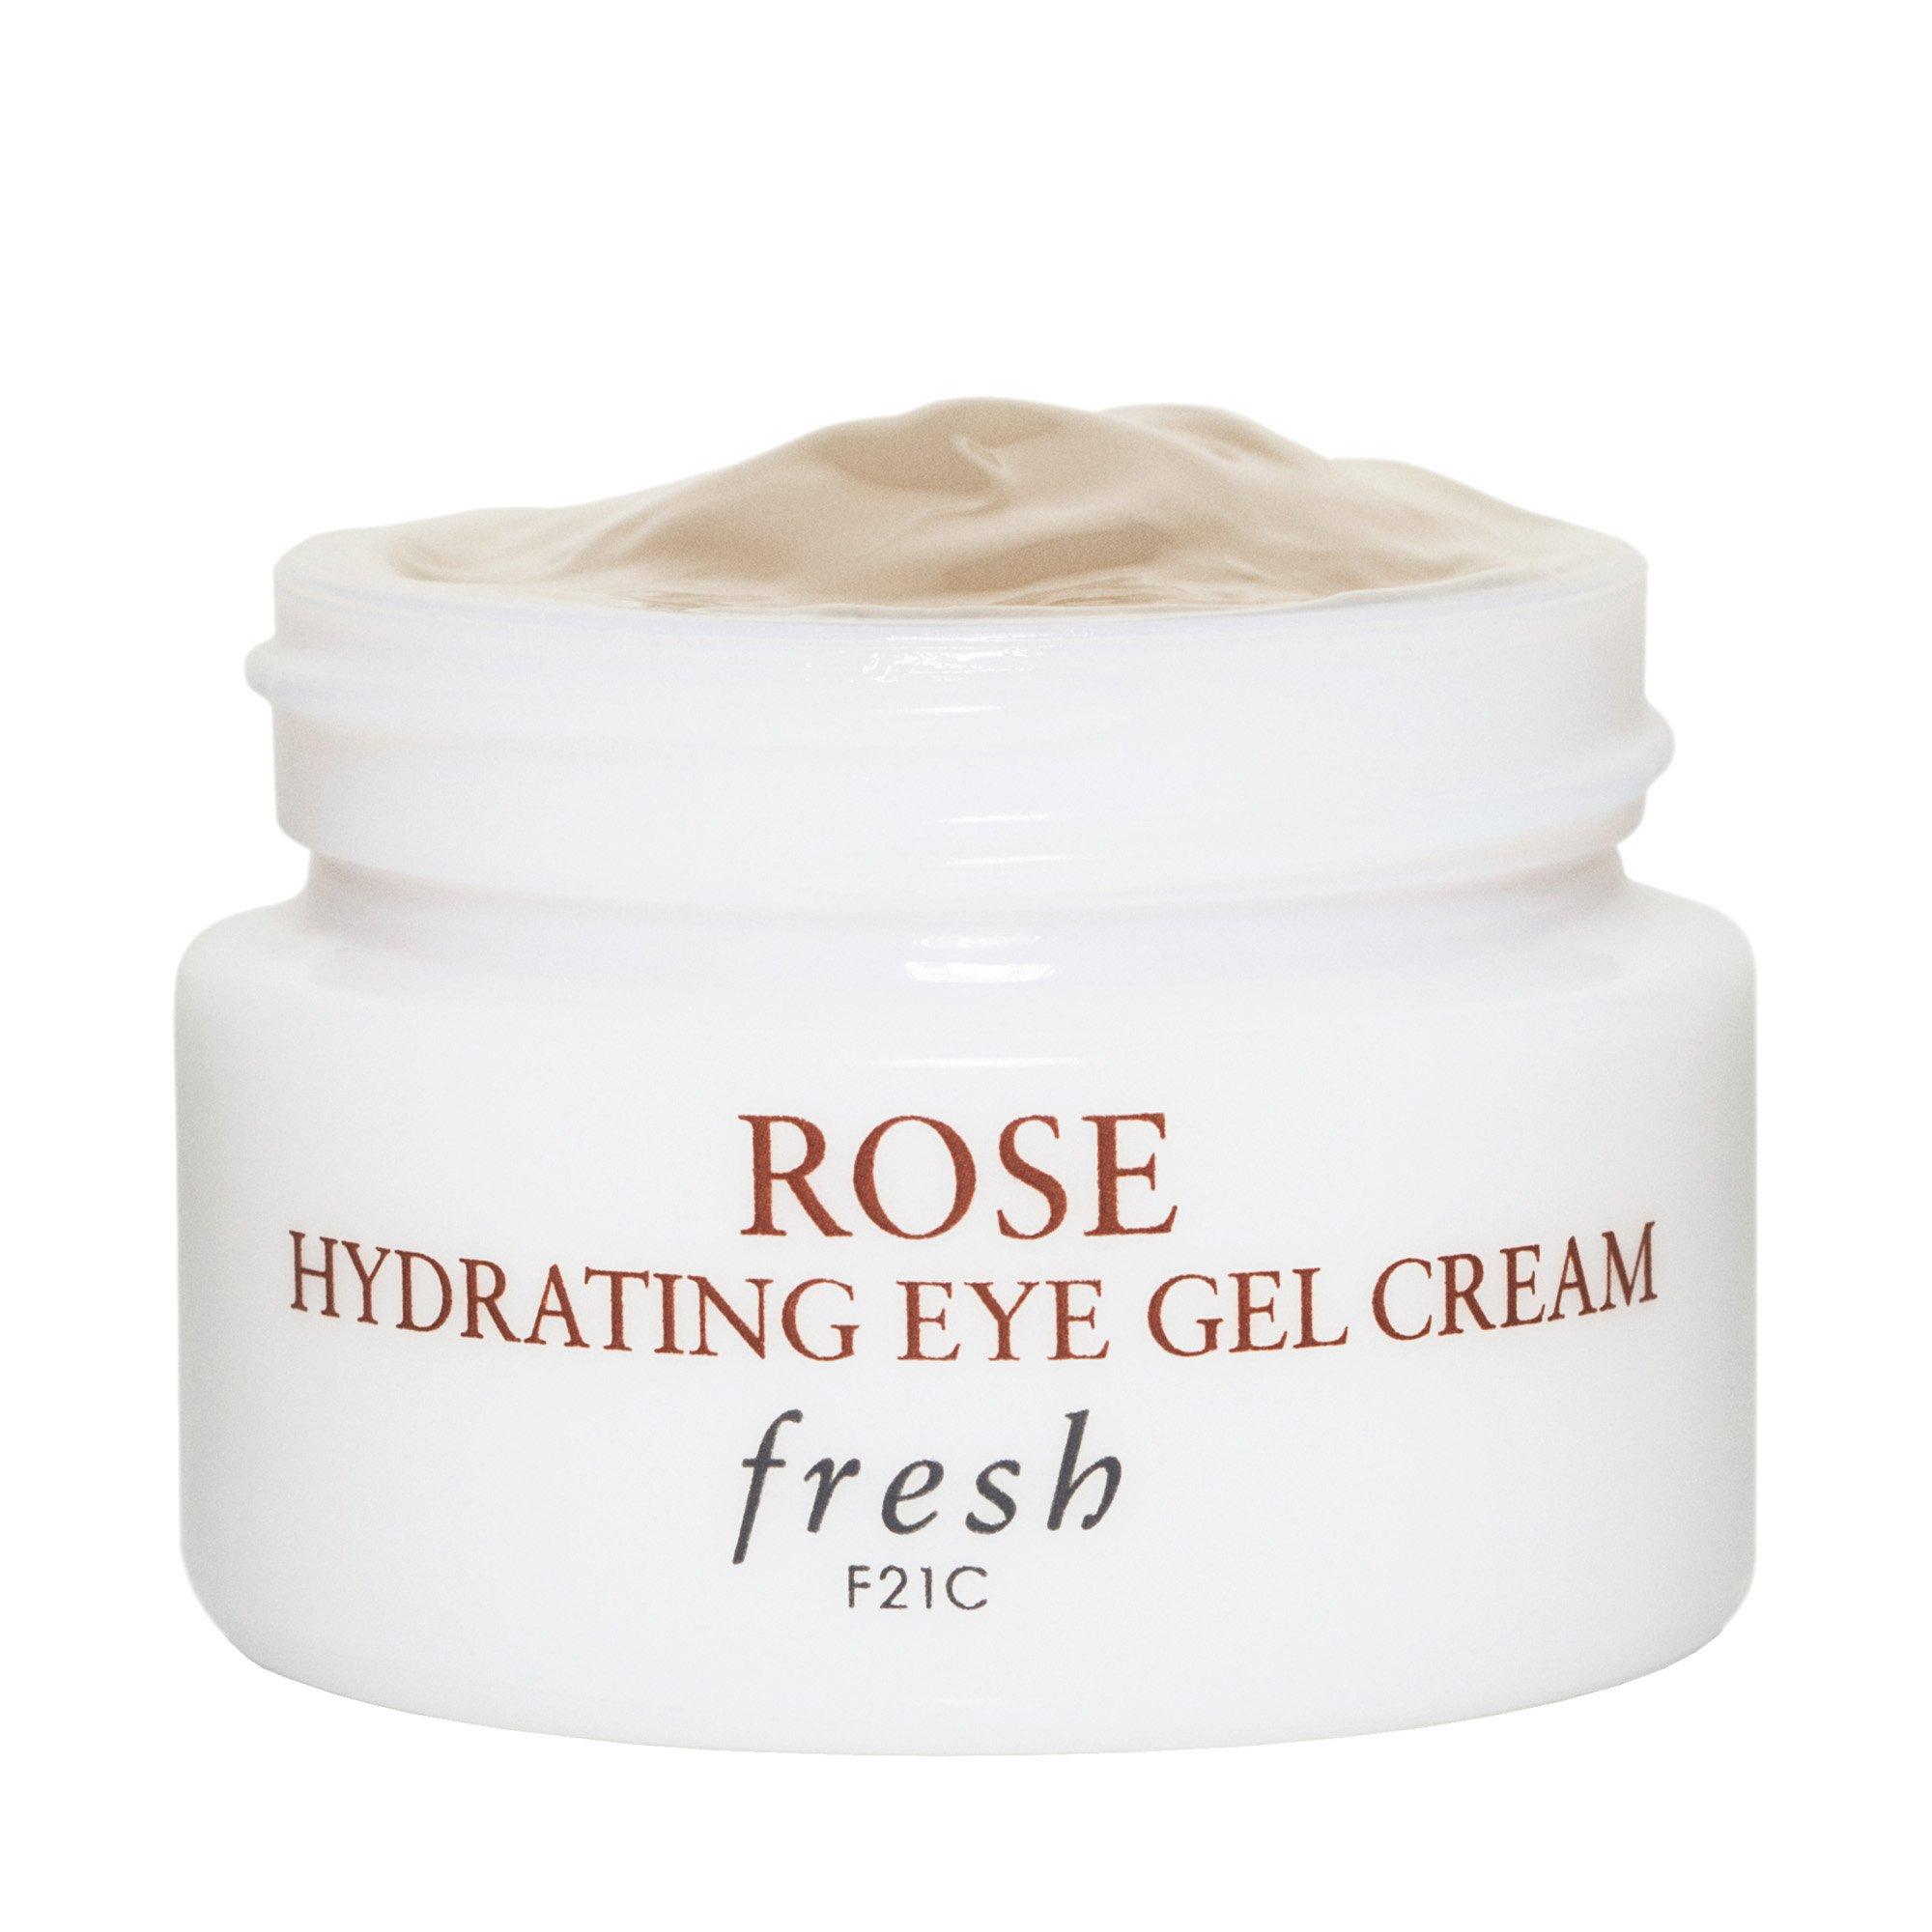 Fresh ROSE Rose Eye Gel Cream 